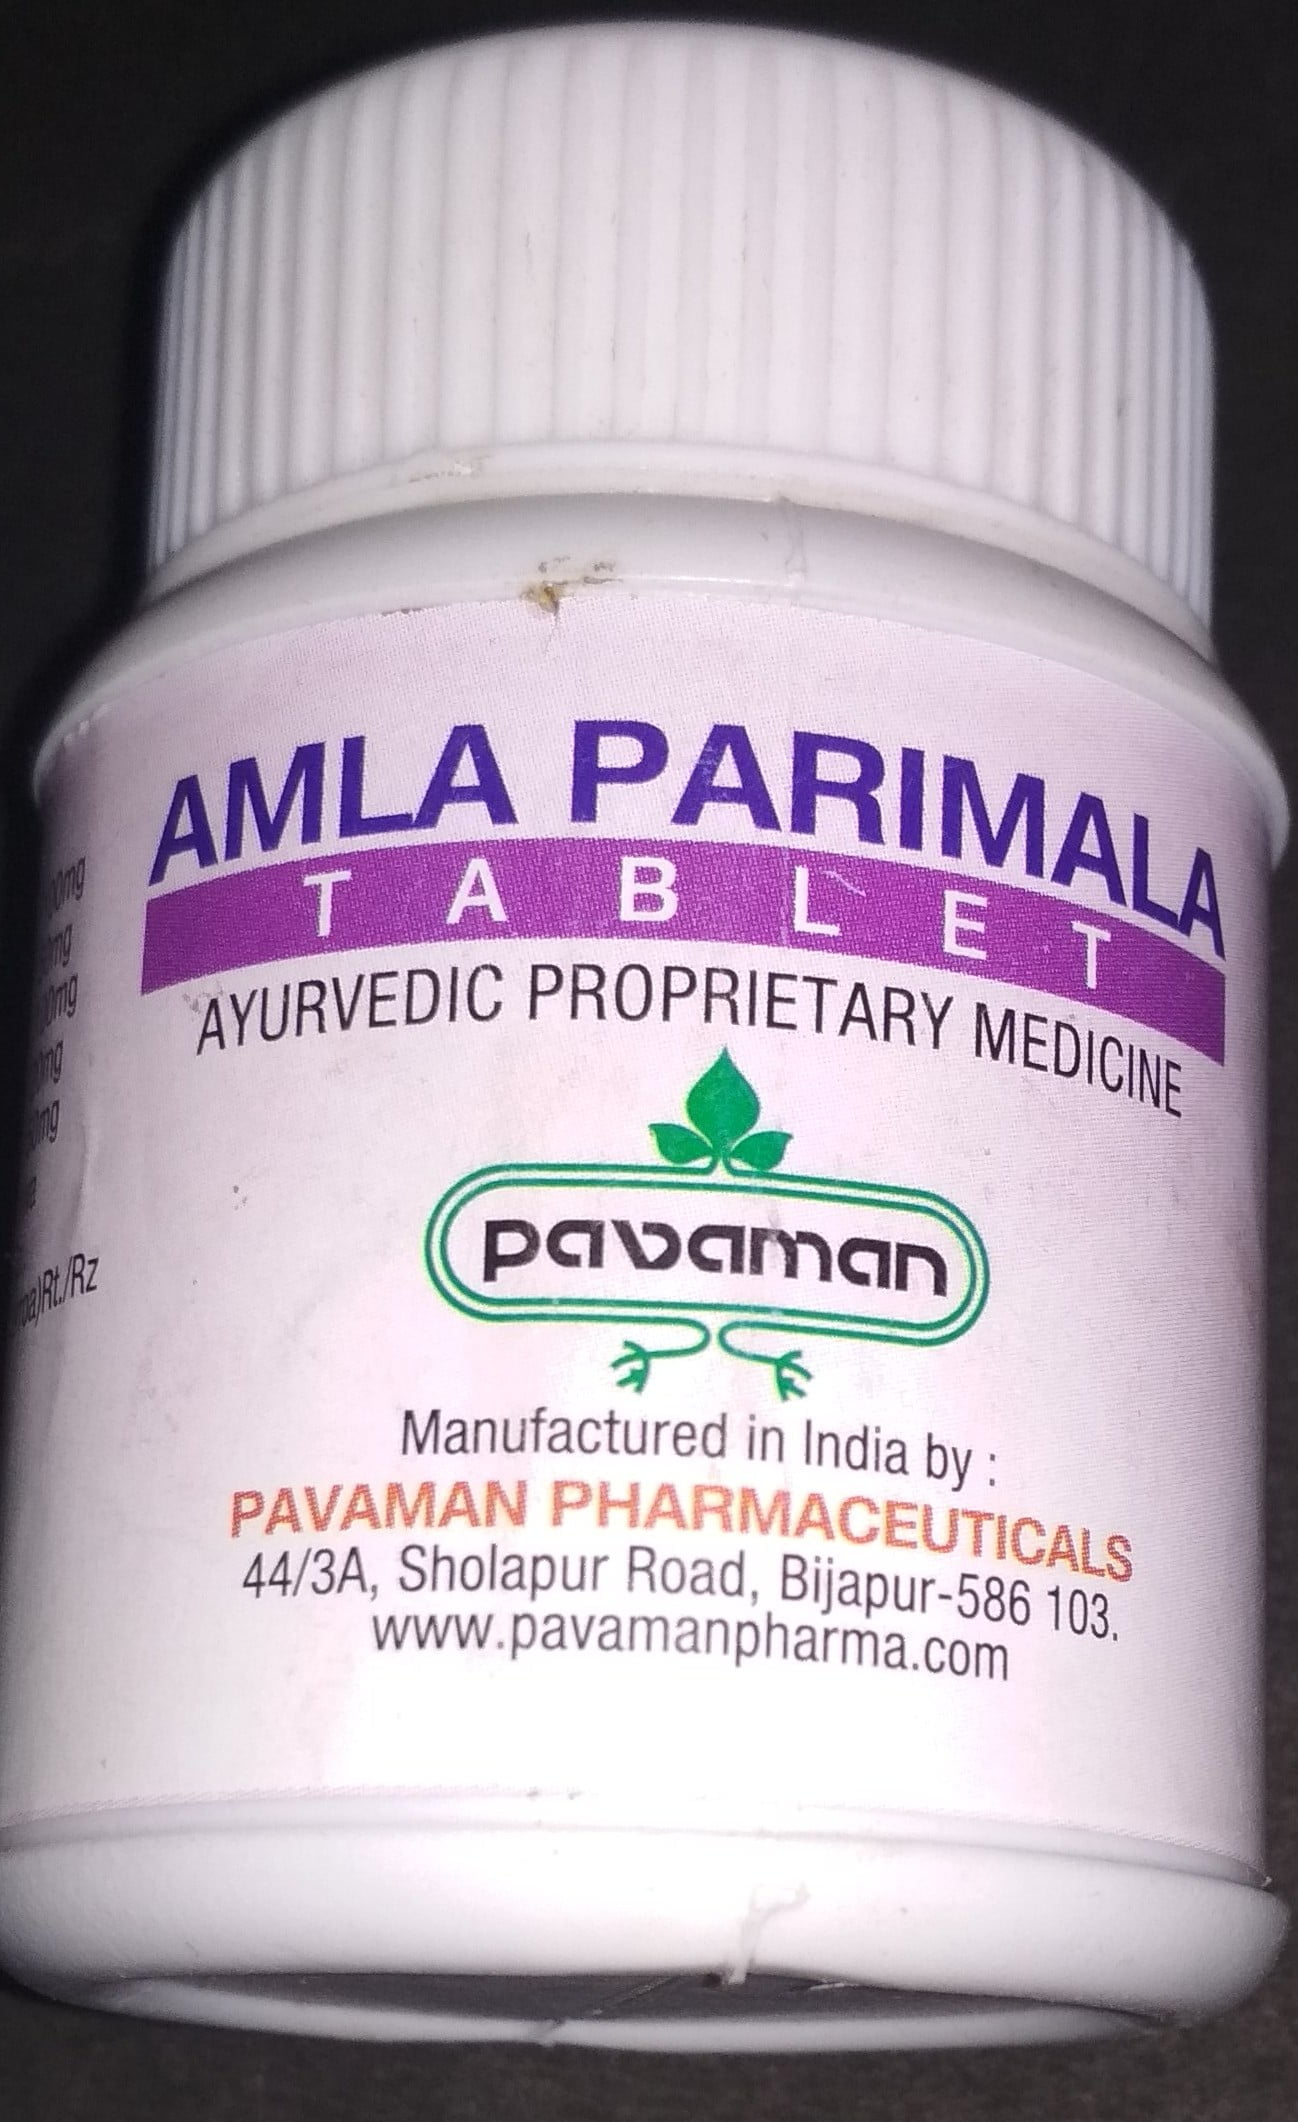 amla parimala tab 200tab upto 20% off pavaman pharmaceuticals